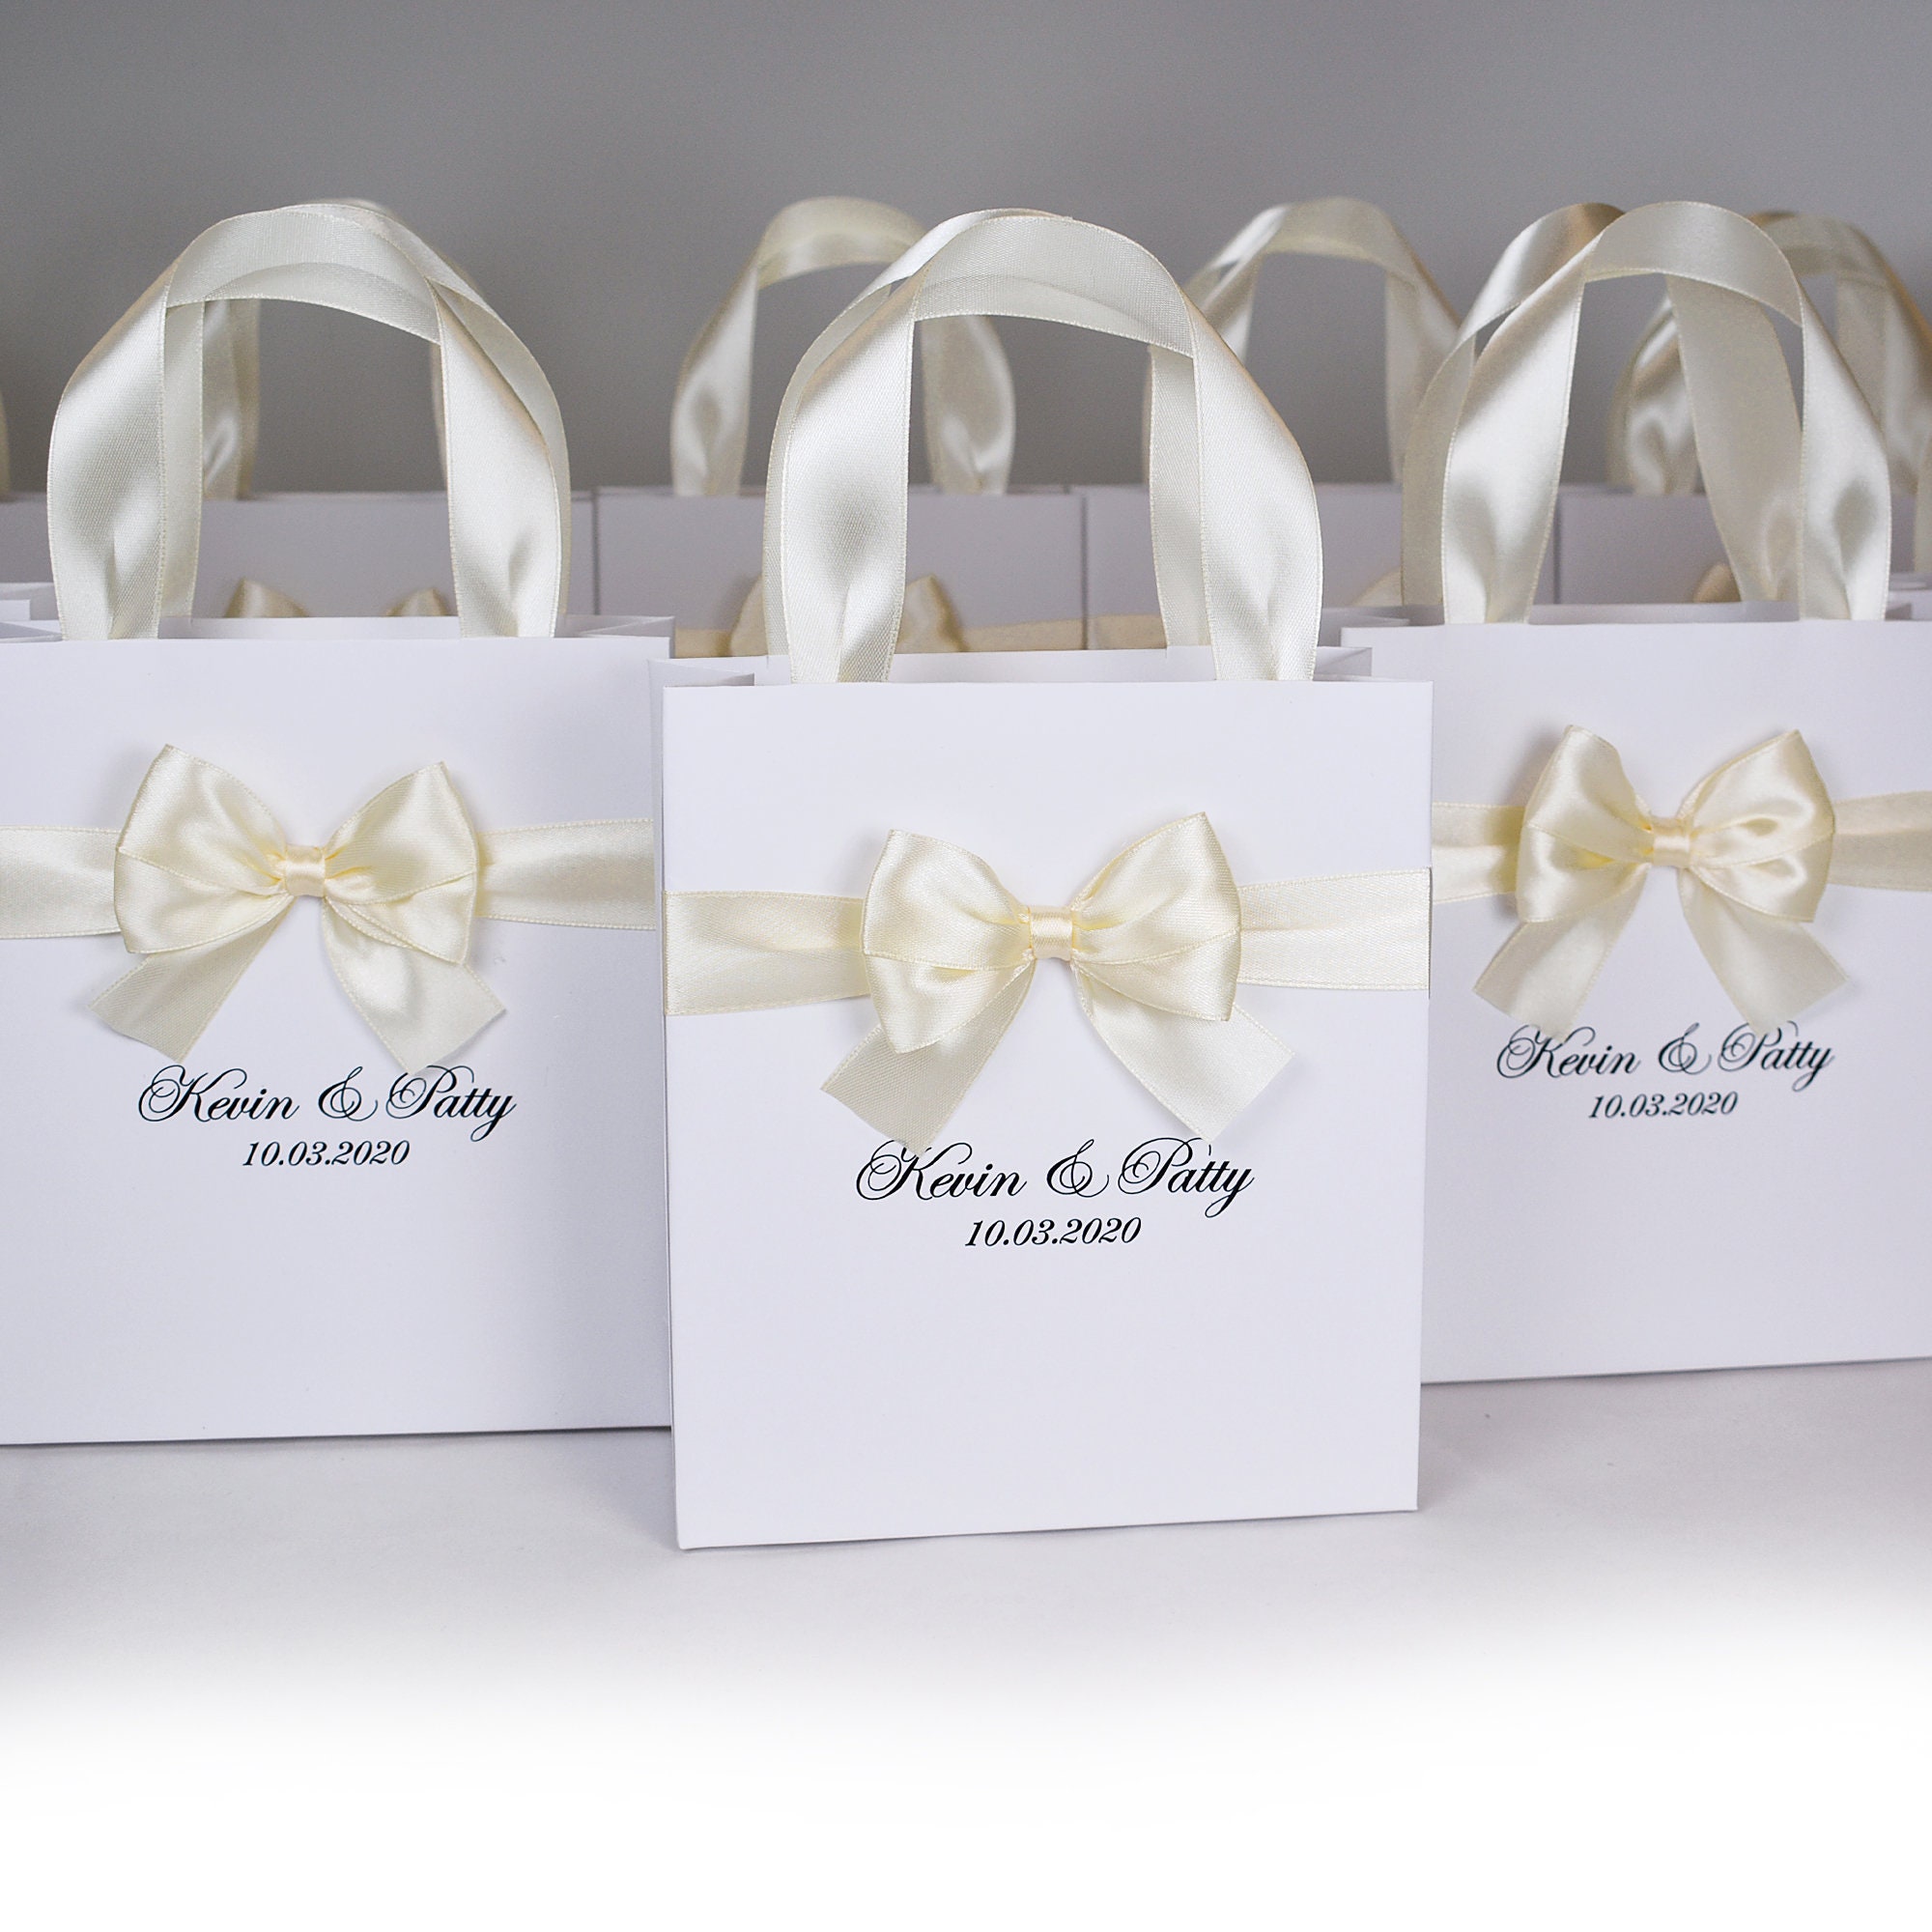 Printed Jute Gift Bags: A Traditional Gift Jute Bag set of 4